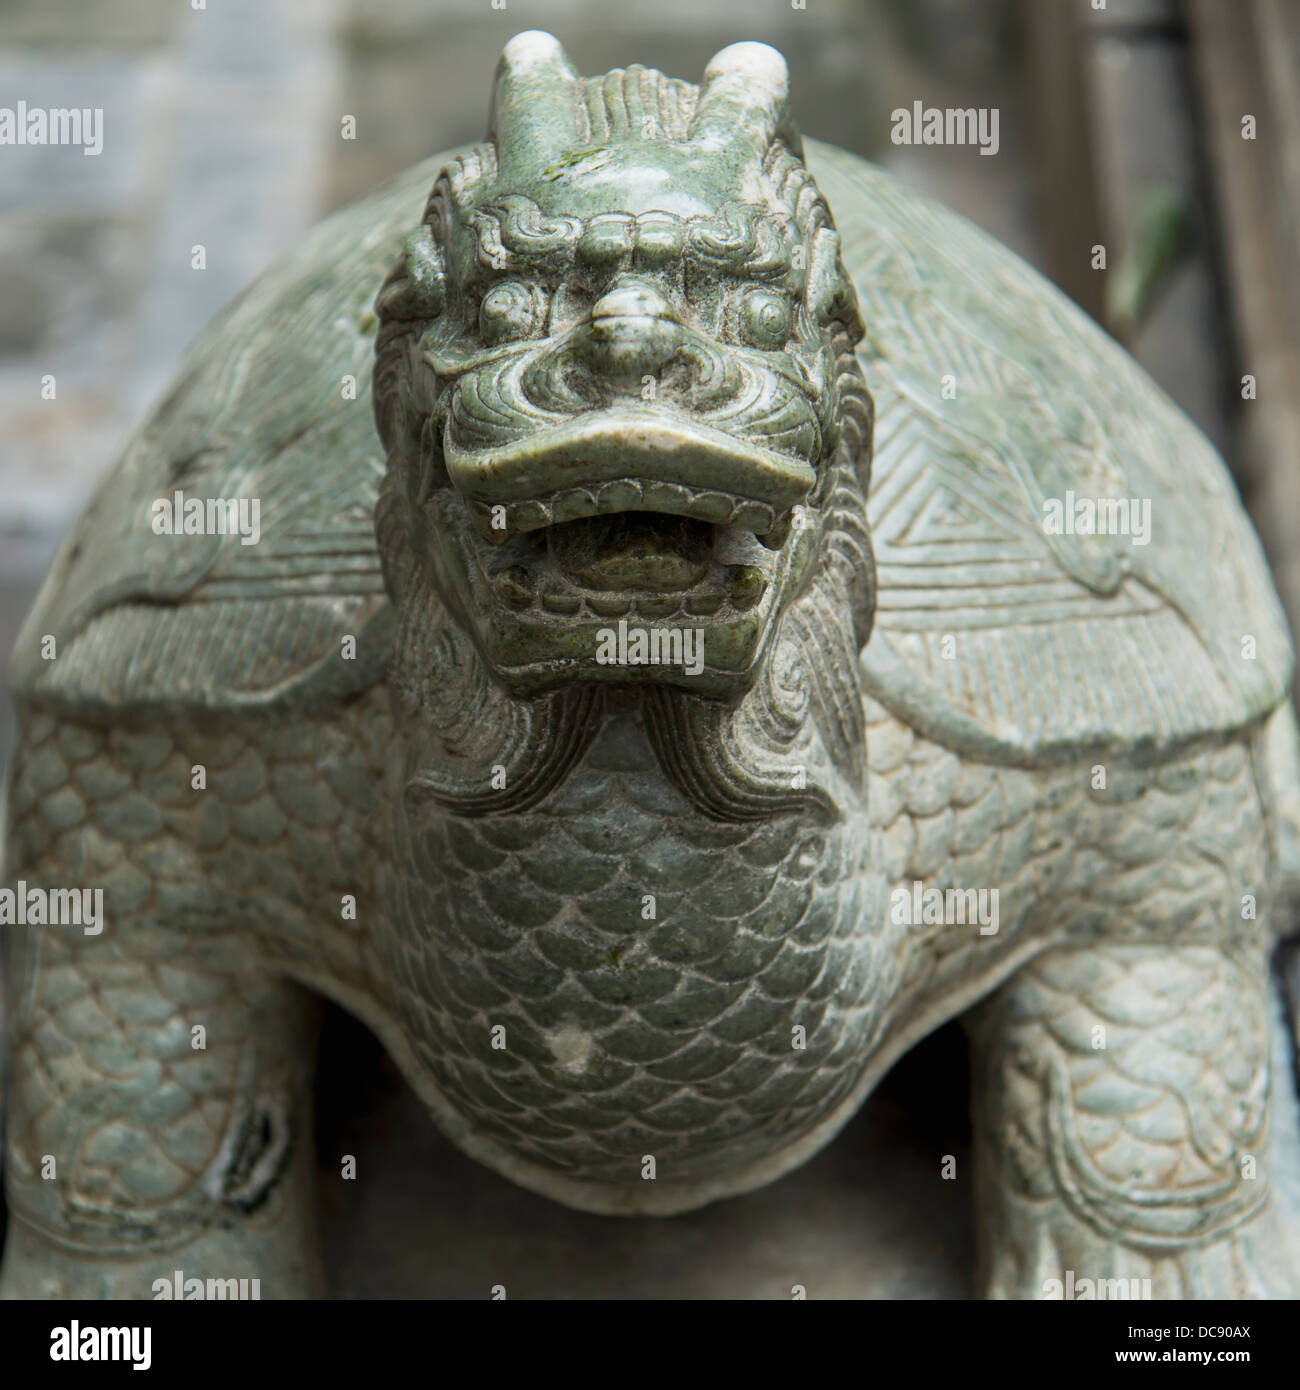 Sculpture of animal likeness at Lama Temple; Beijing, China Stock Photo